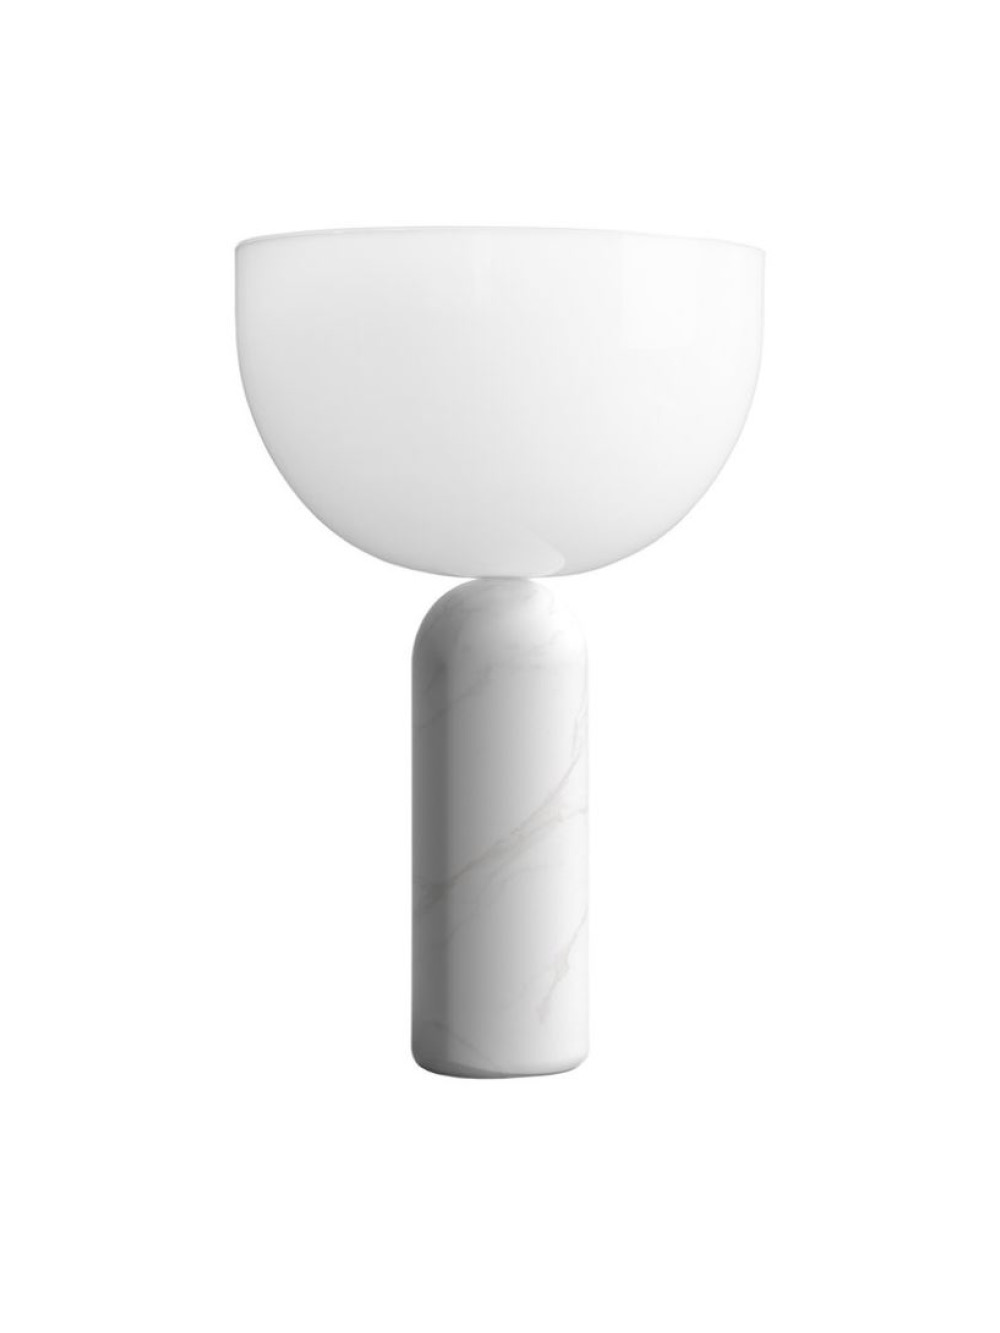 Kizu Table Lamp, New Works - White Marble, Small